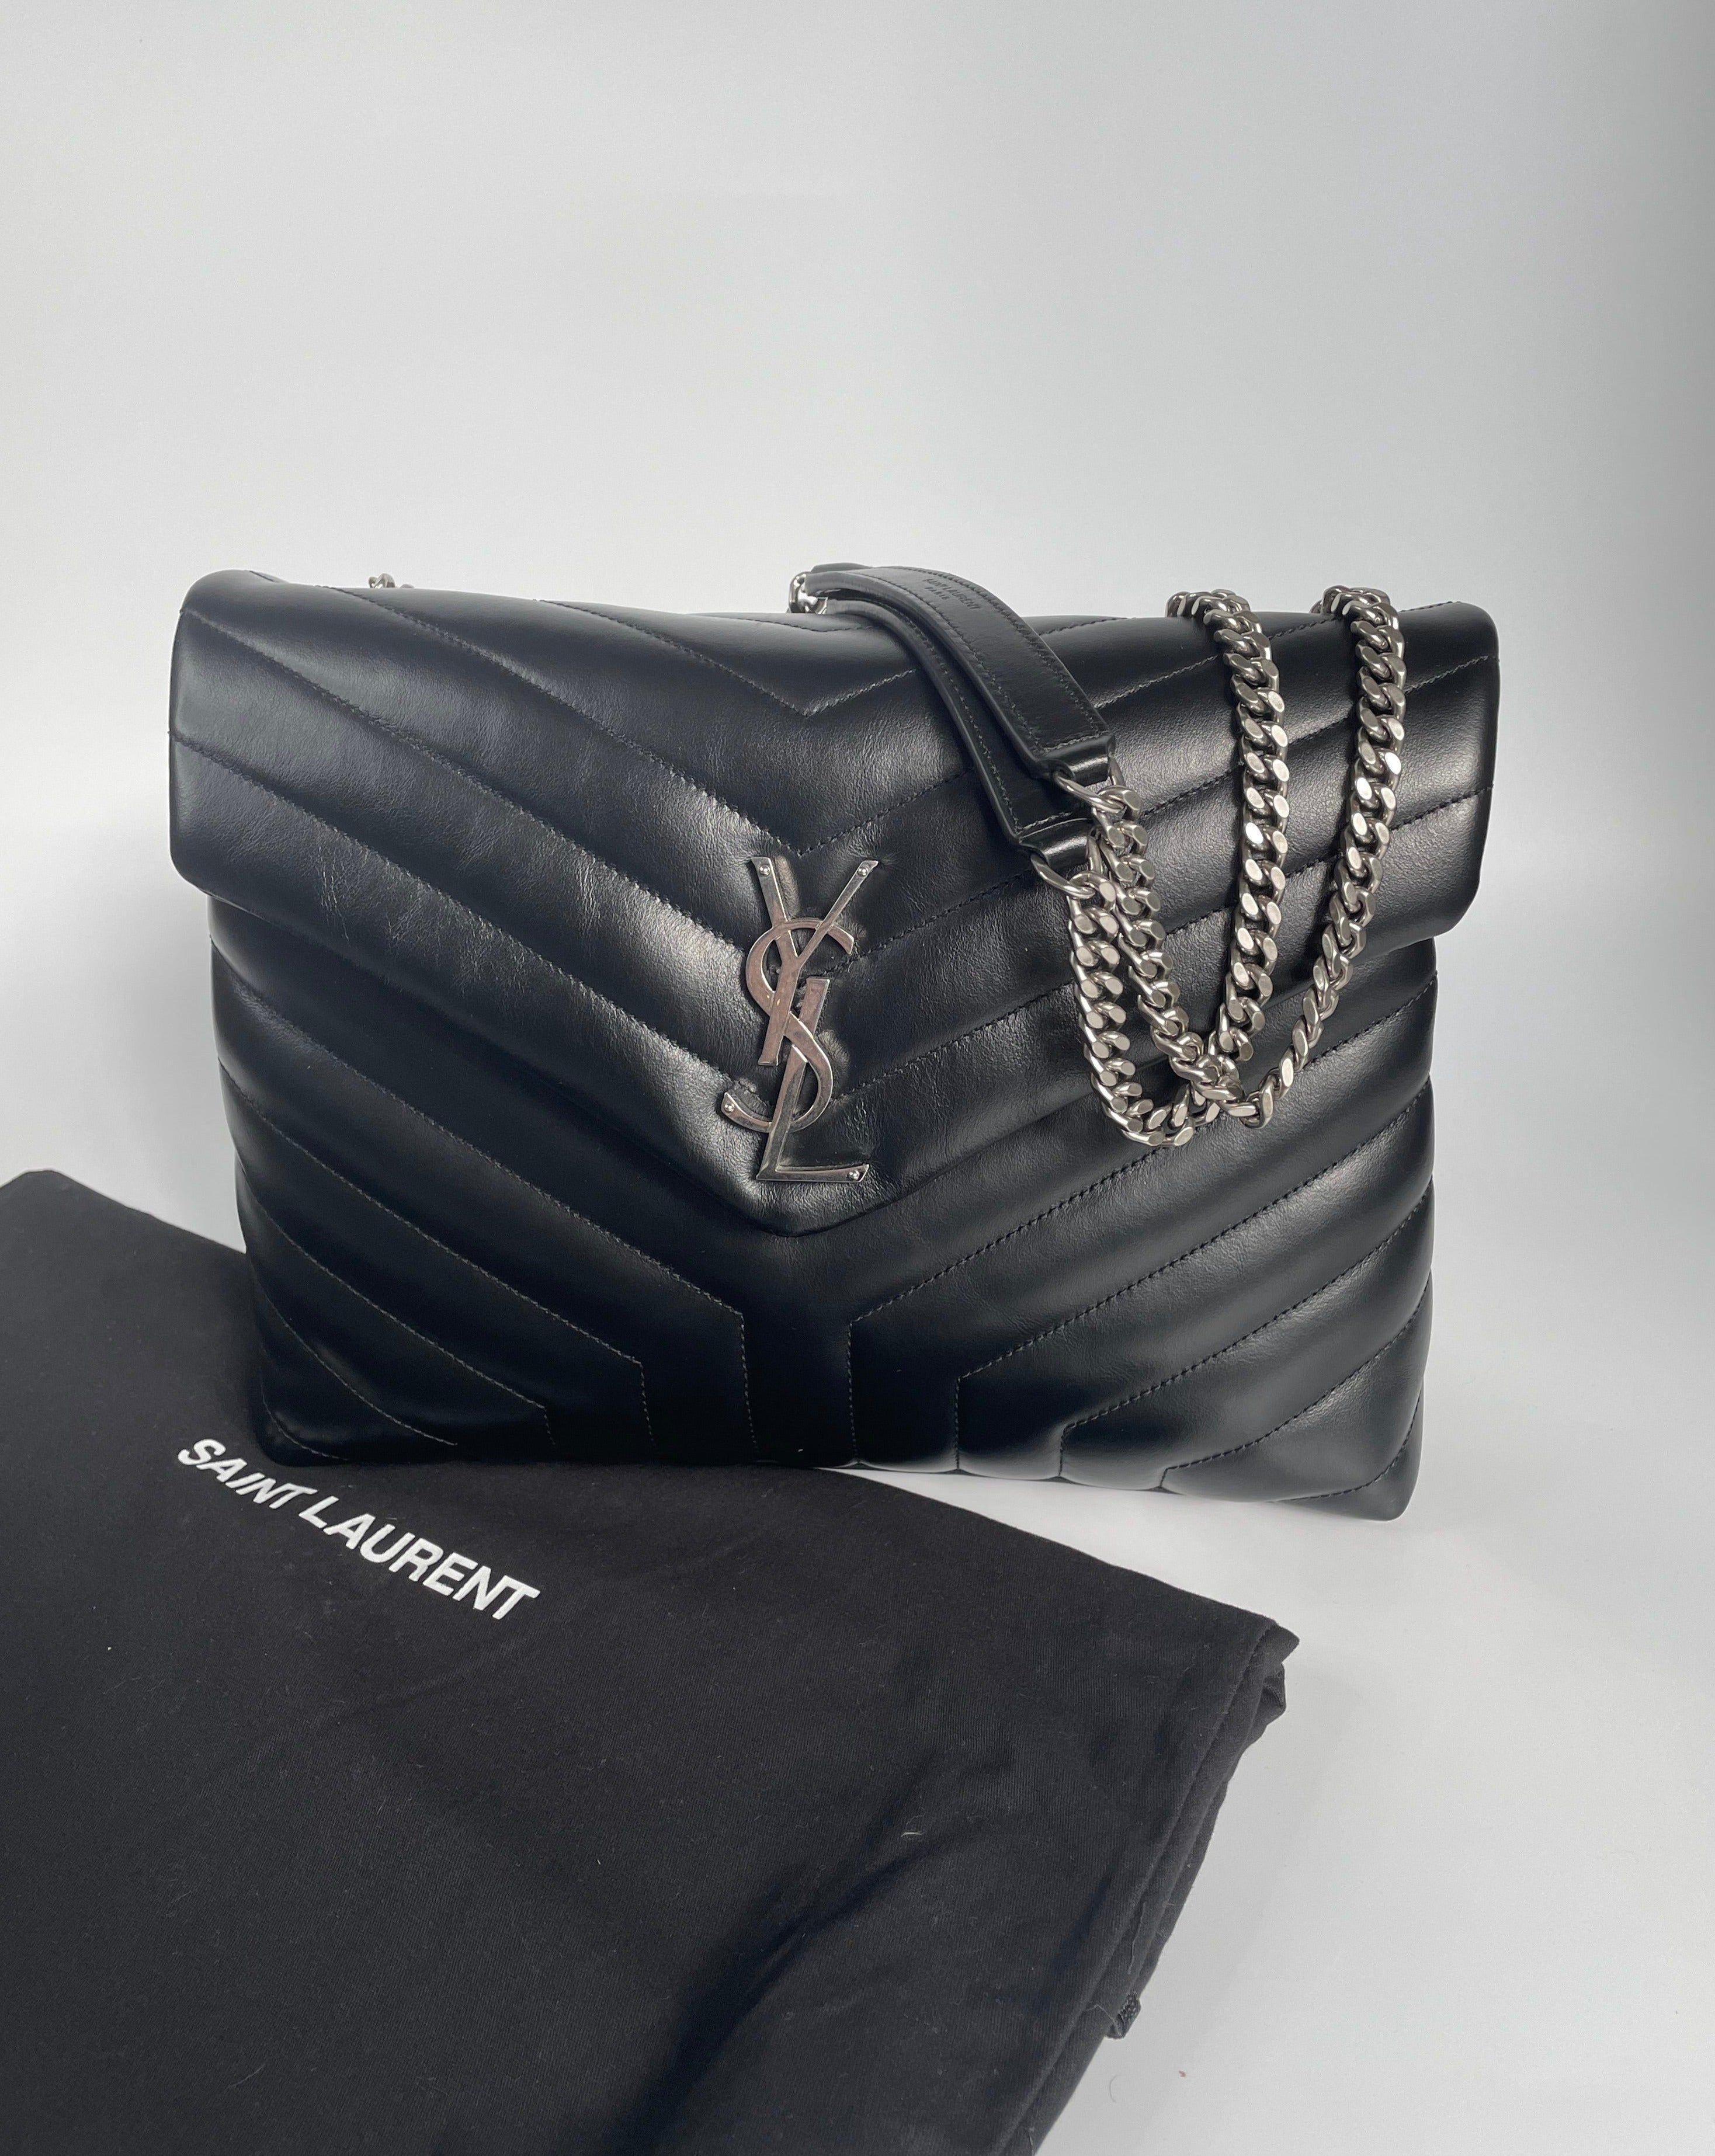 Ysl | Loulou Medium Chain Bag | Black